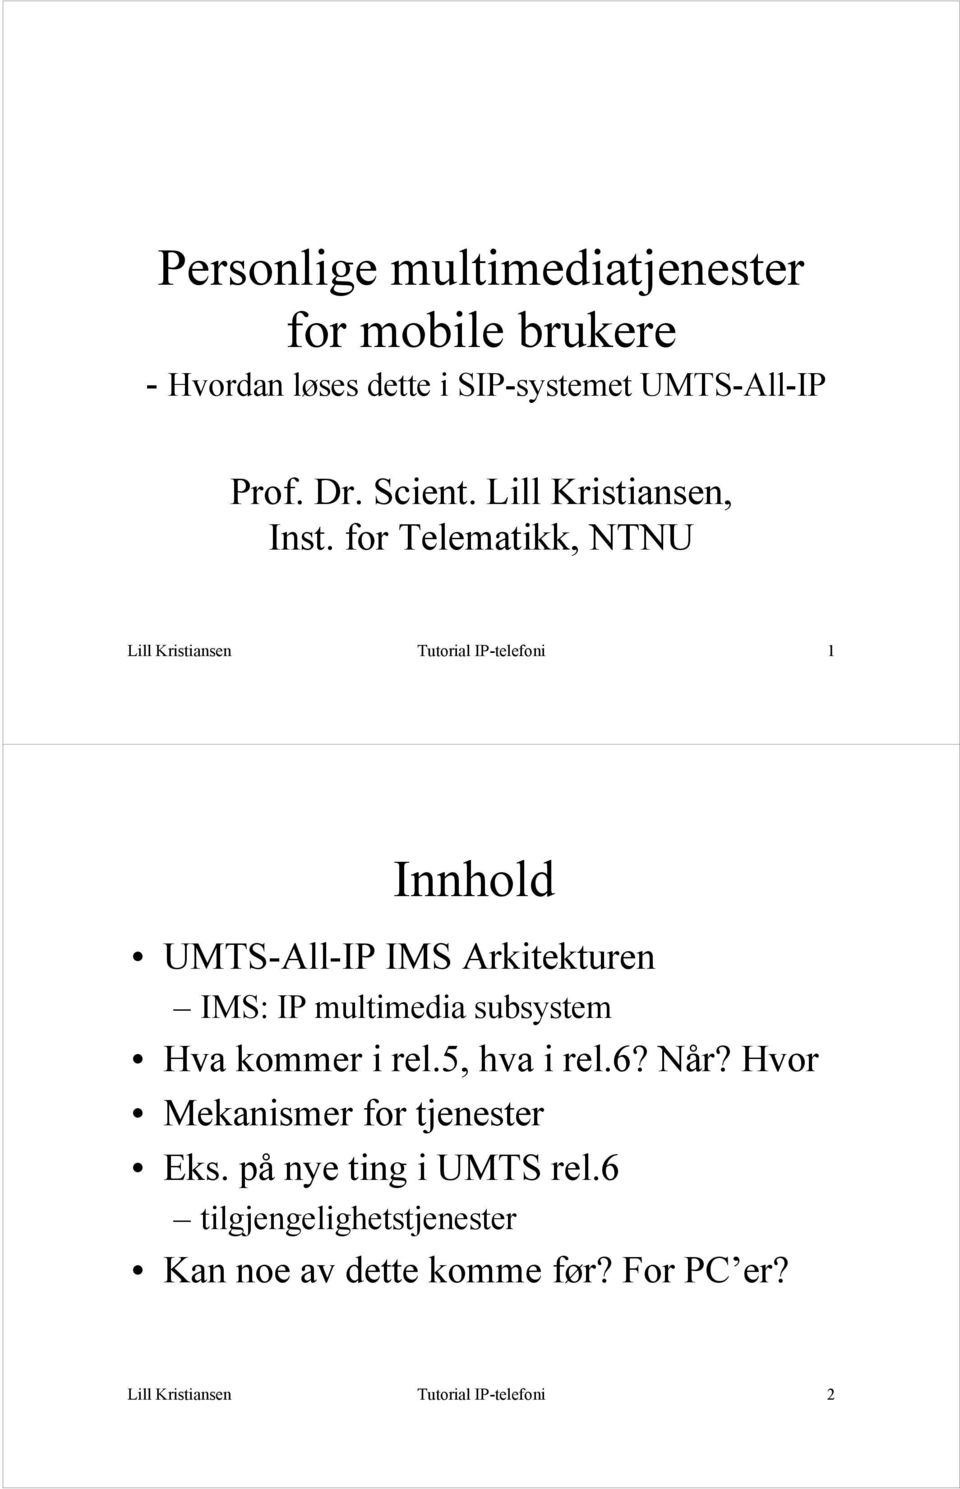 for Telematikk, NTNU Lill Kristiansen Tutorial IP-telefoni 1 Innhold UMTS-All-IP IMS Arkitekturen IMS: IP multimedia